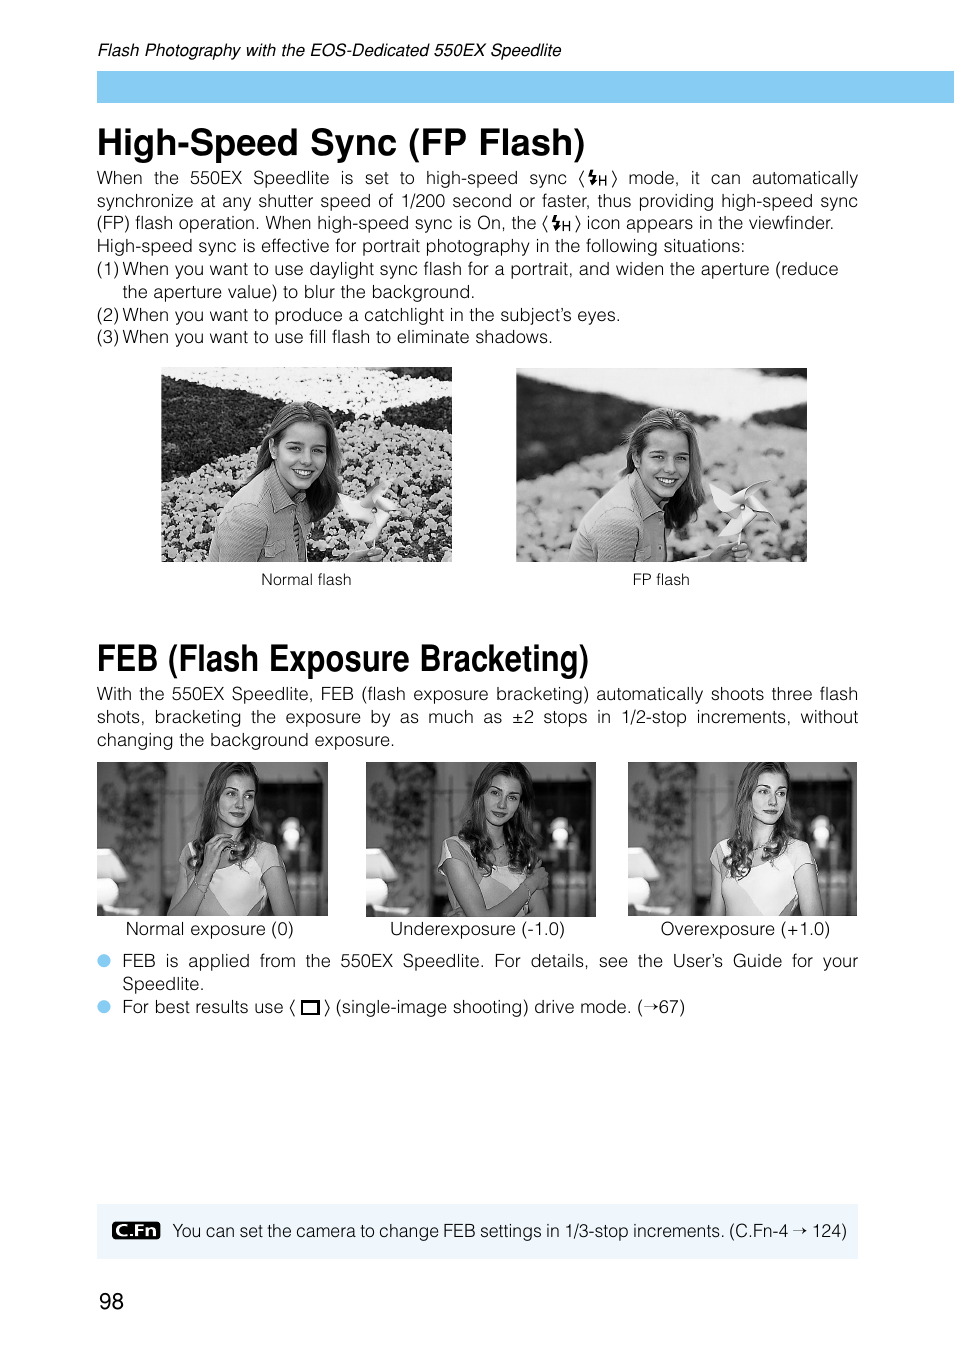 Feb (flash exposure bracketing), High-speed sync (fp flash) | Canon EOS D30 User Manual | Page 98 / 152